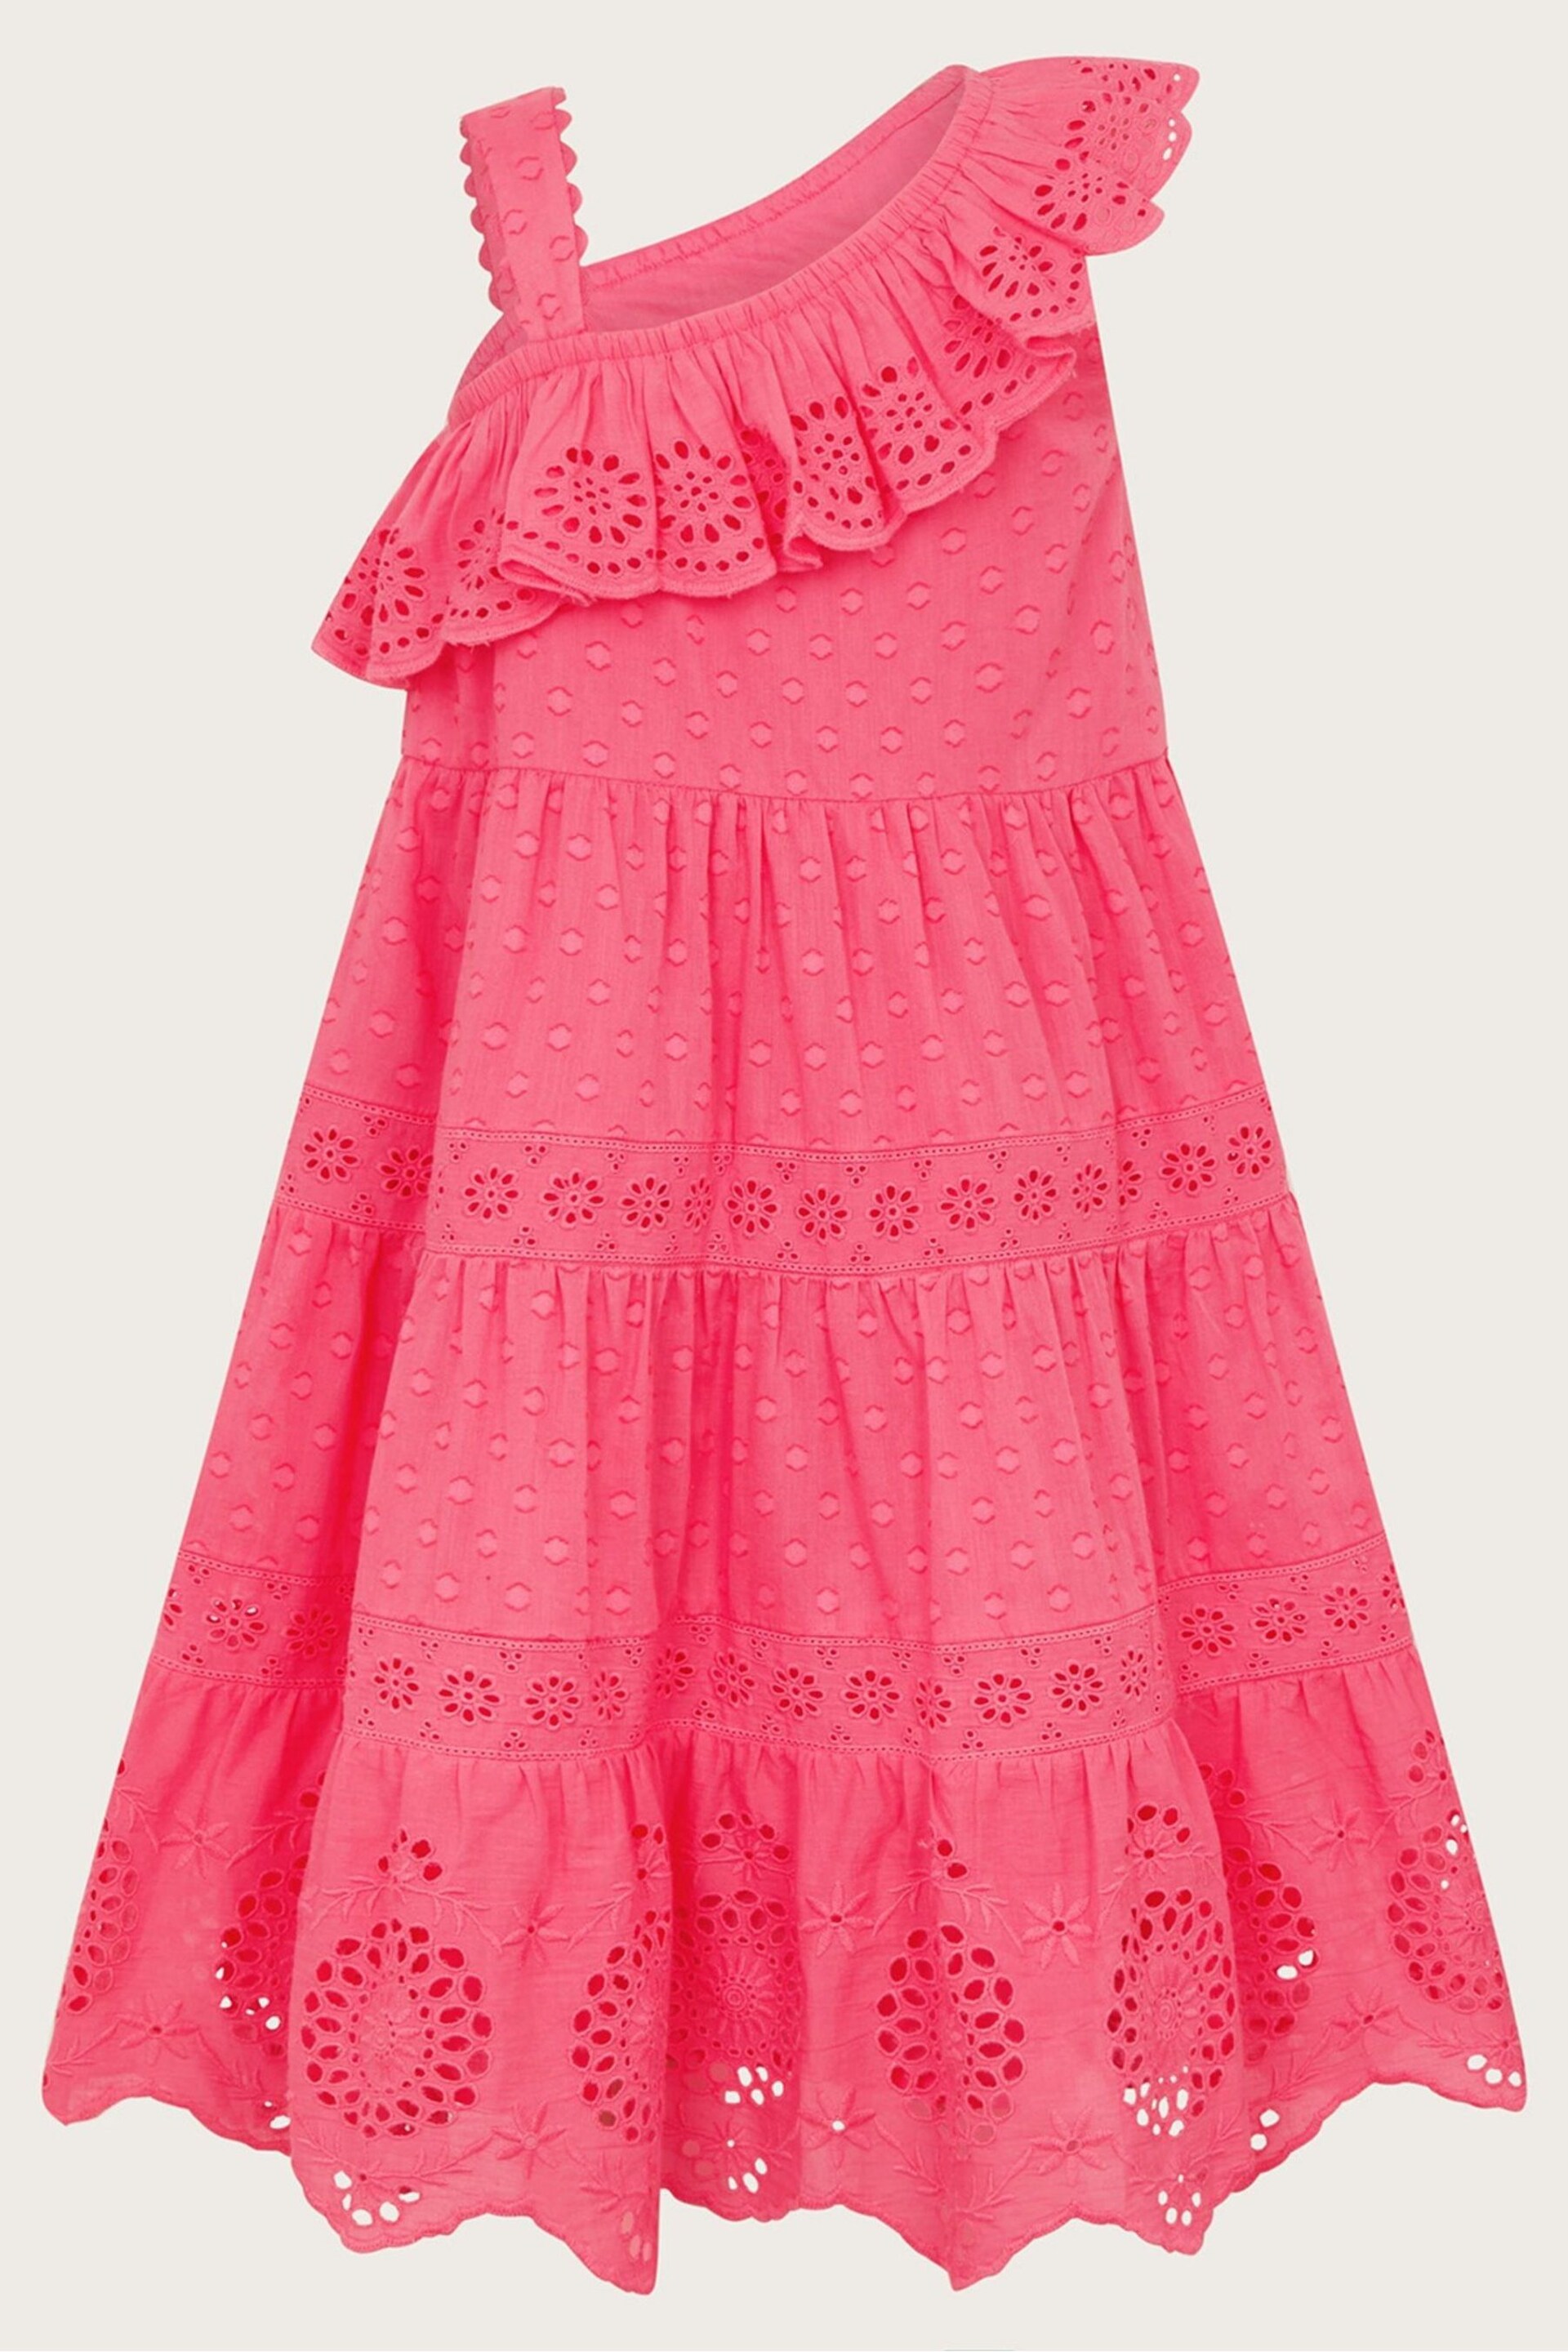 Monsoon Pink One-Shoulder Broderie Dress - Image 2 of 3